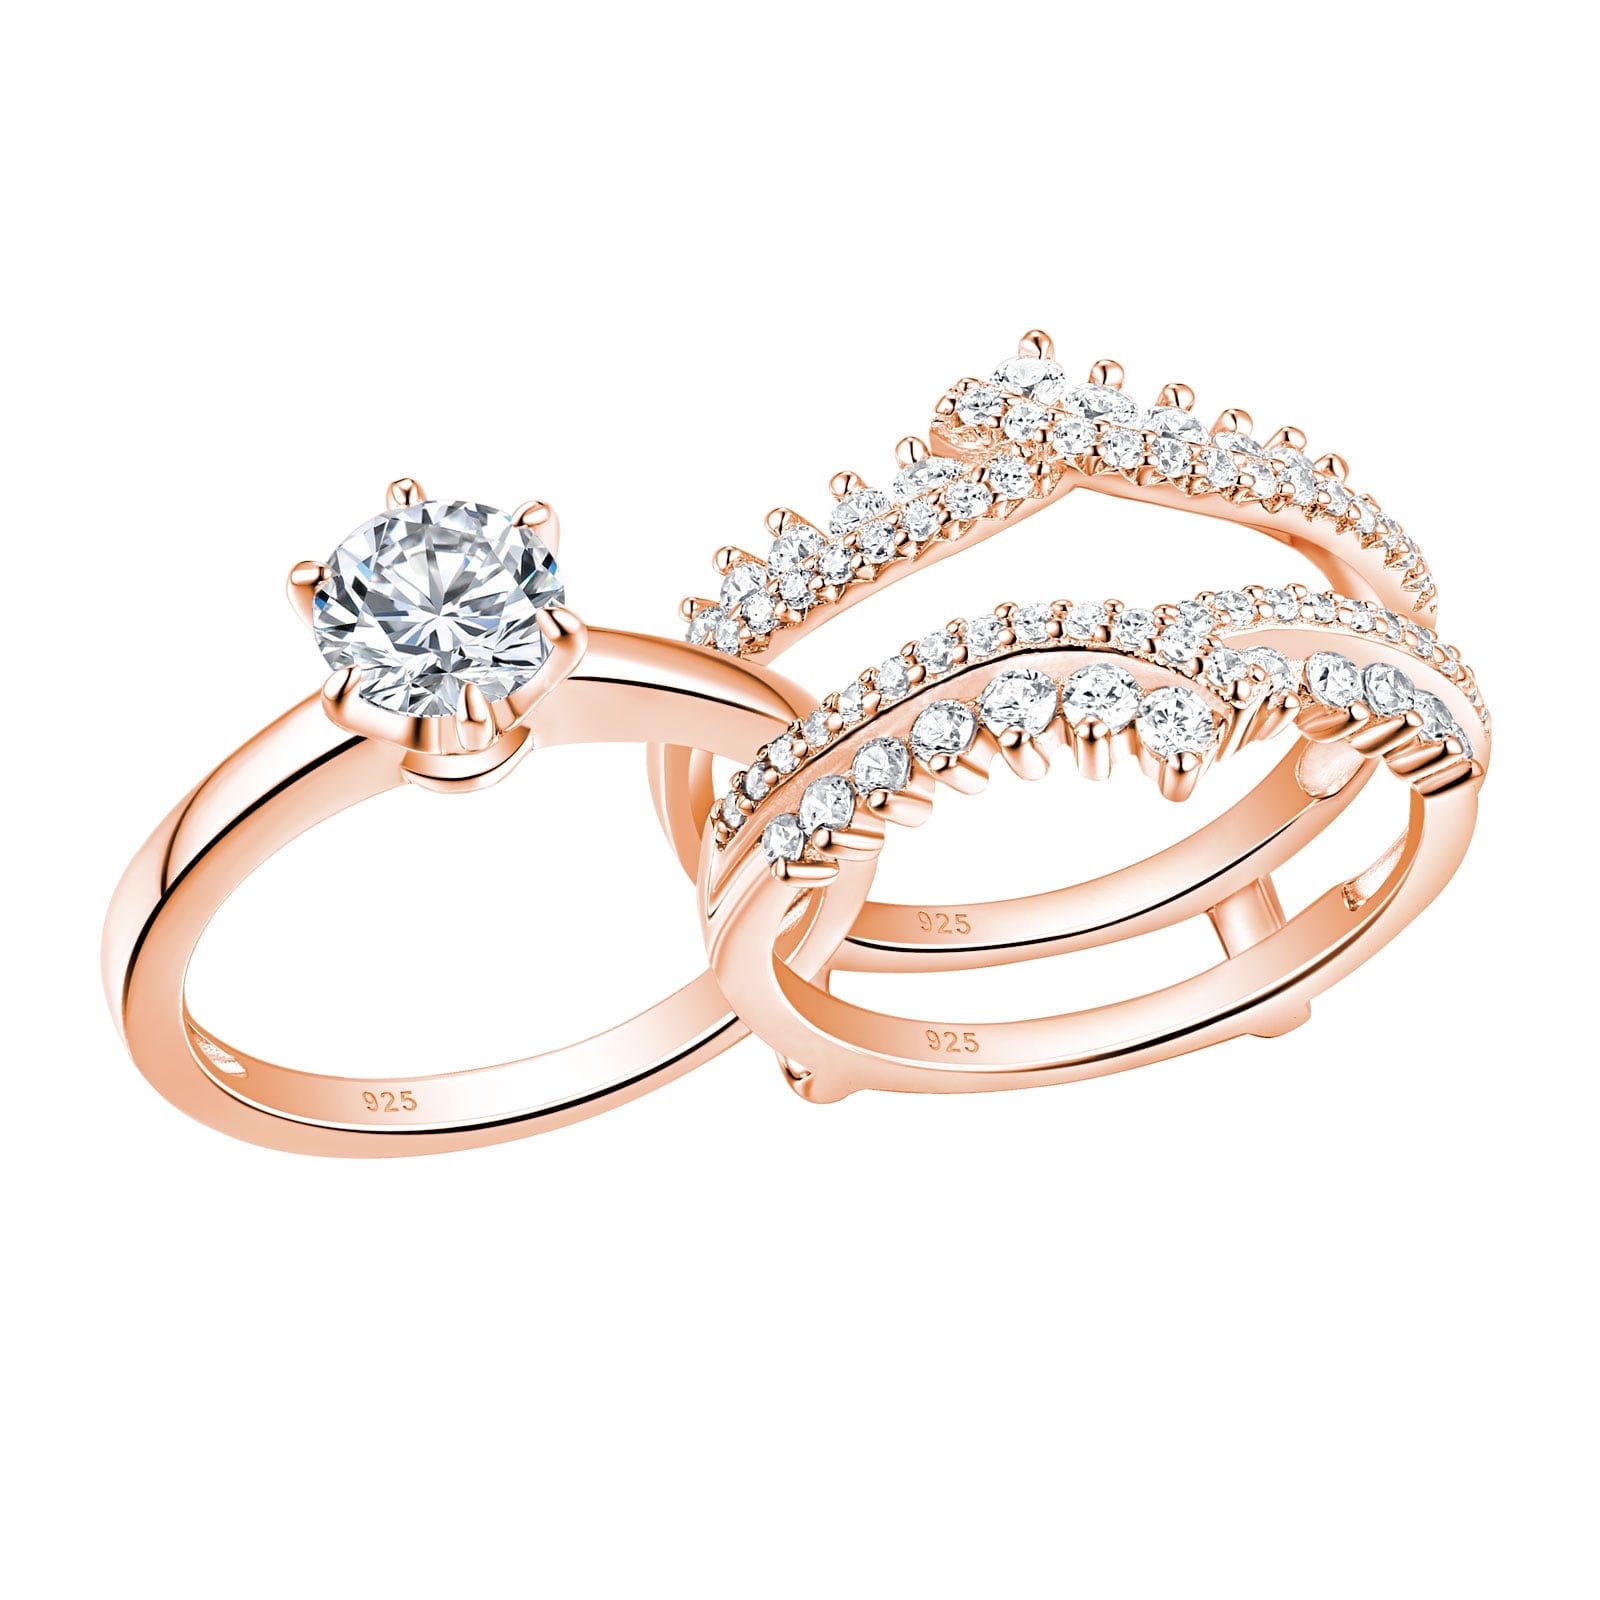 Newshe Wedding Rings for Women Engagement Ring Enhancer Band Bridal Set Sterling Silver 1.8Ct Cz Rose Gold Size 7.5 - image 1 of 7